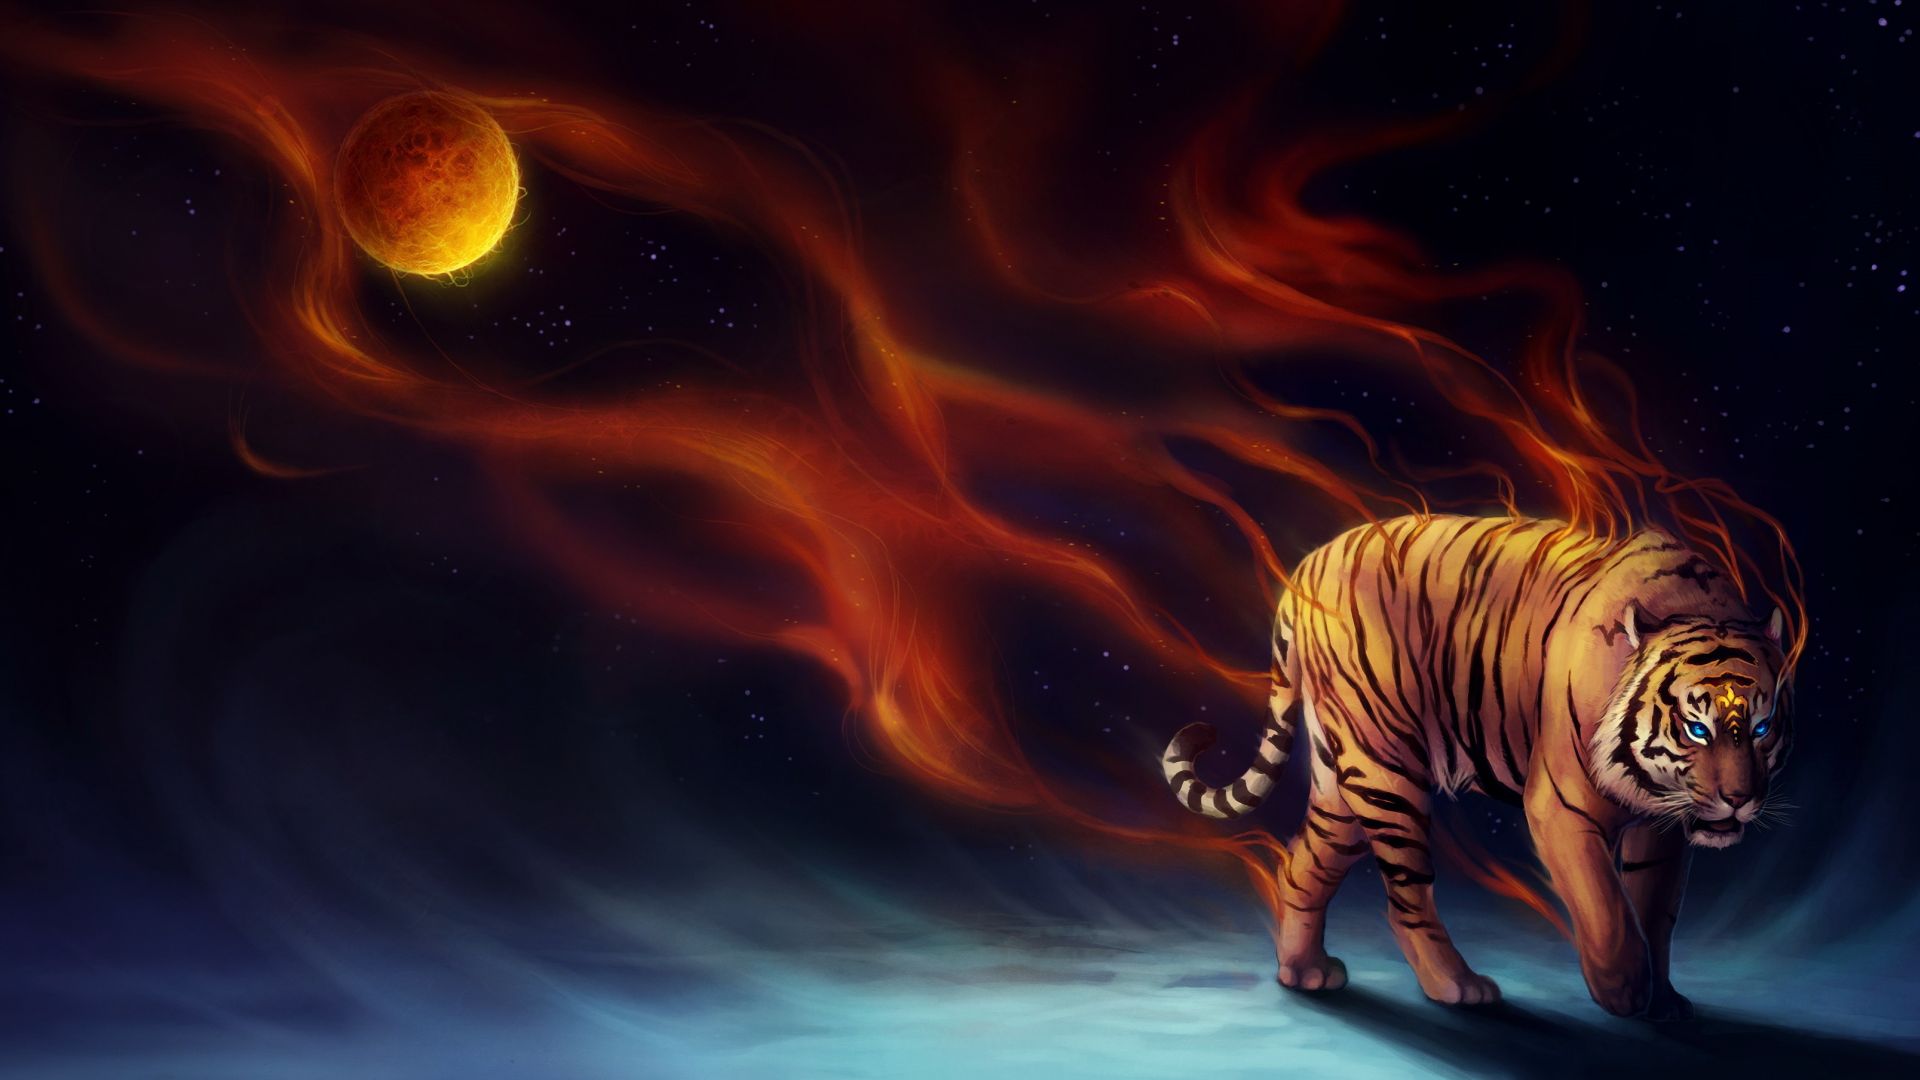 Wallpaper Tiger, fantasy, magical flame, 4k